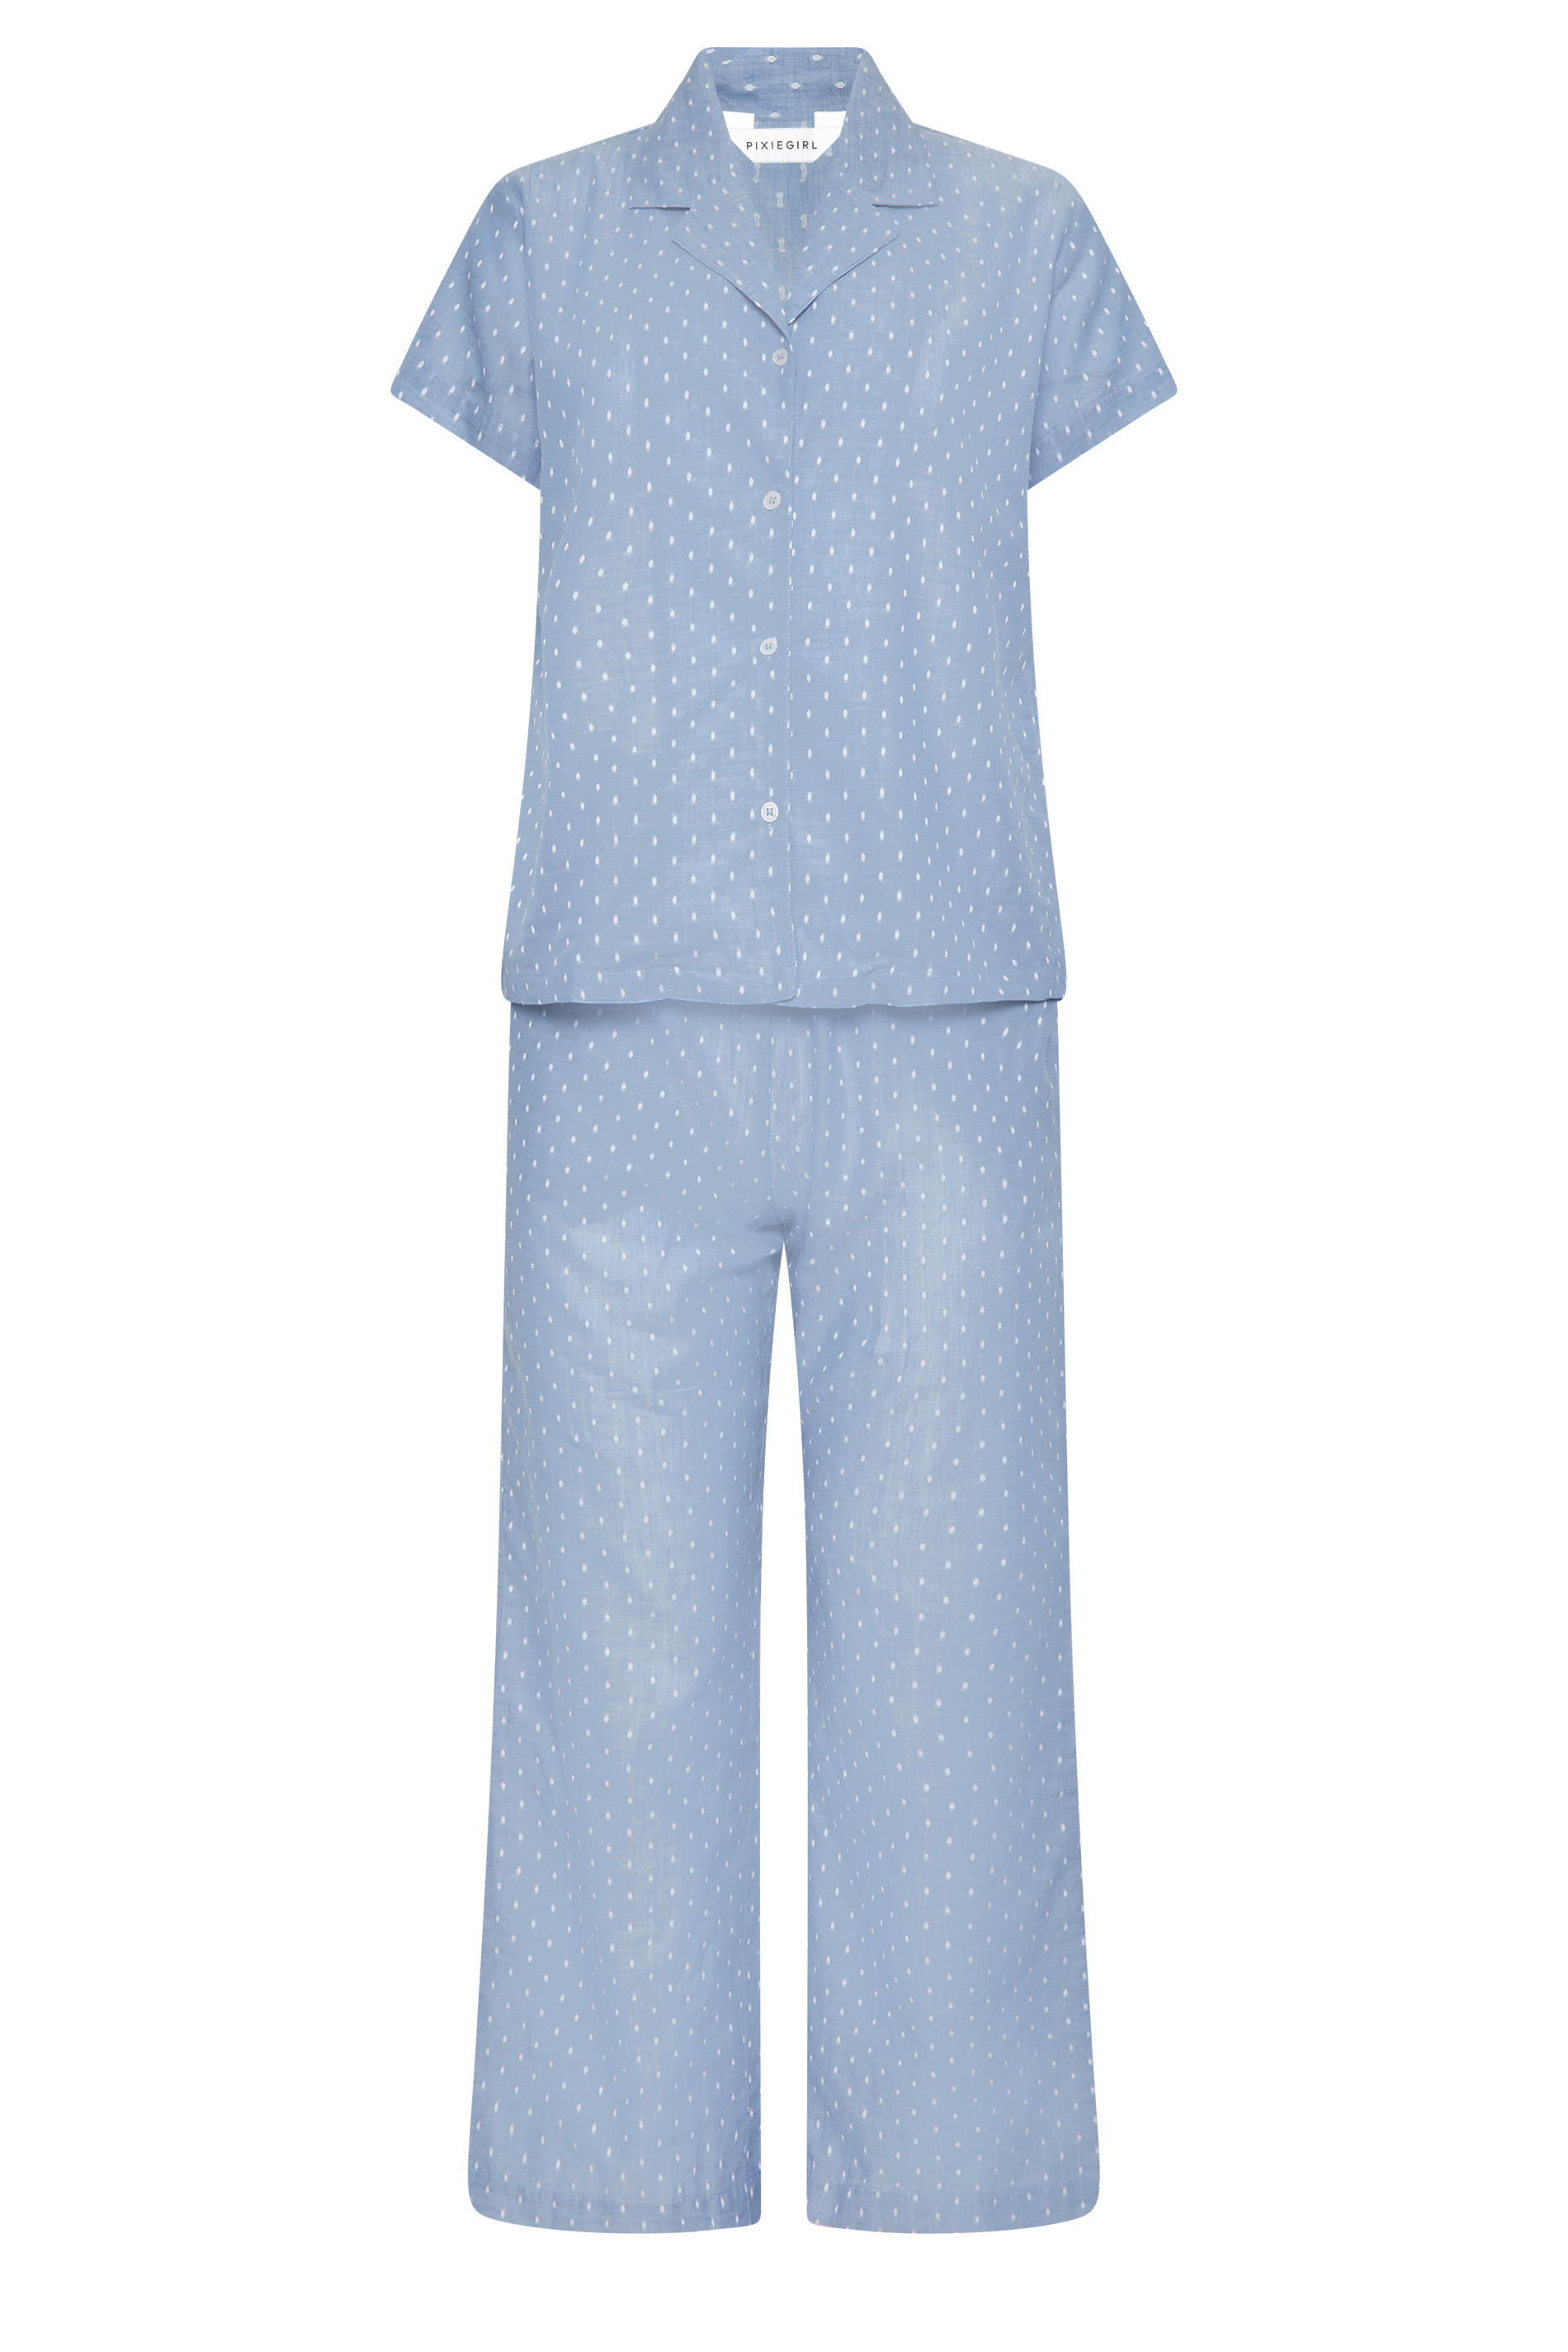 PixieGirl Blue Dobby Spot Woven Pyjama Set | PixieGirl